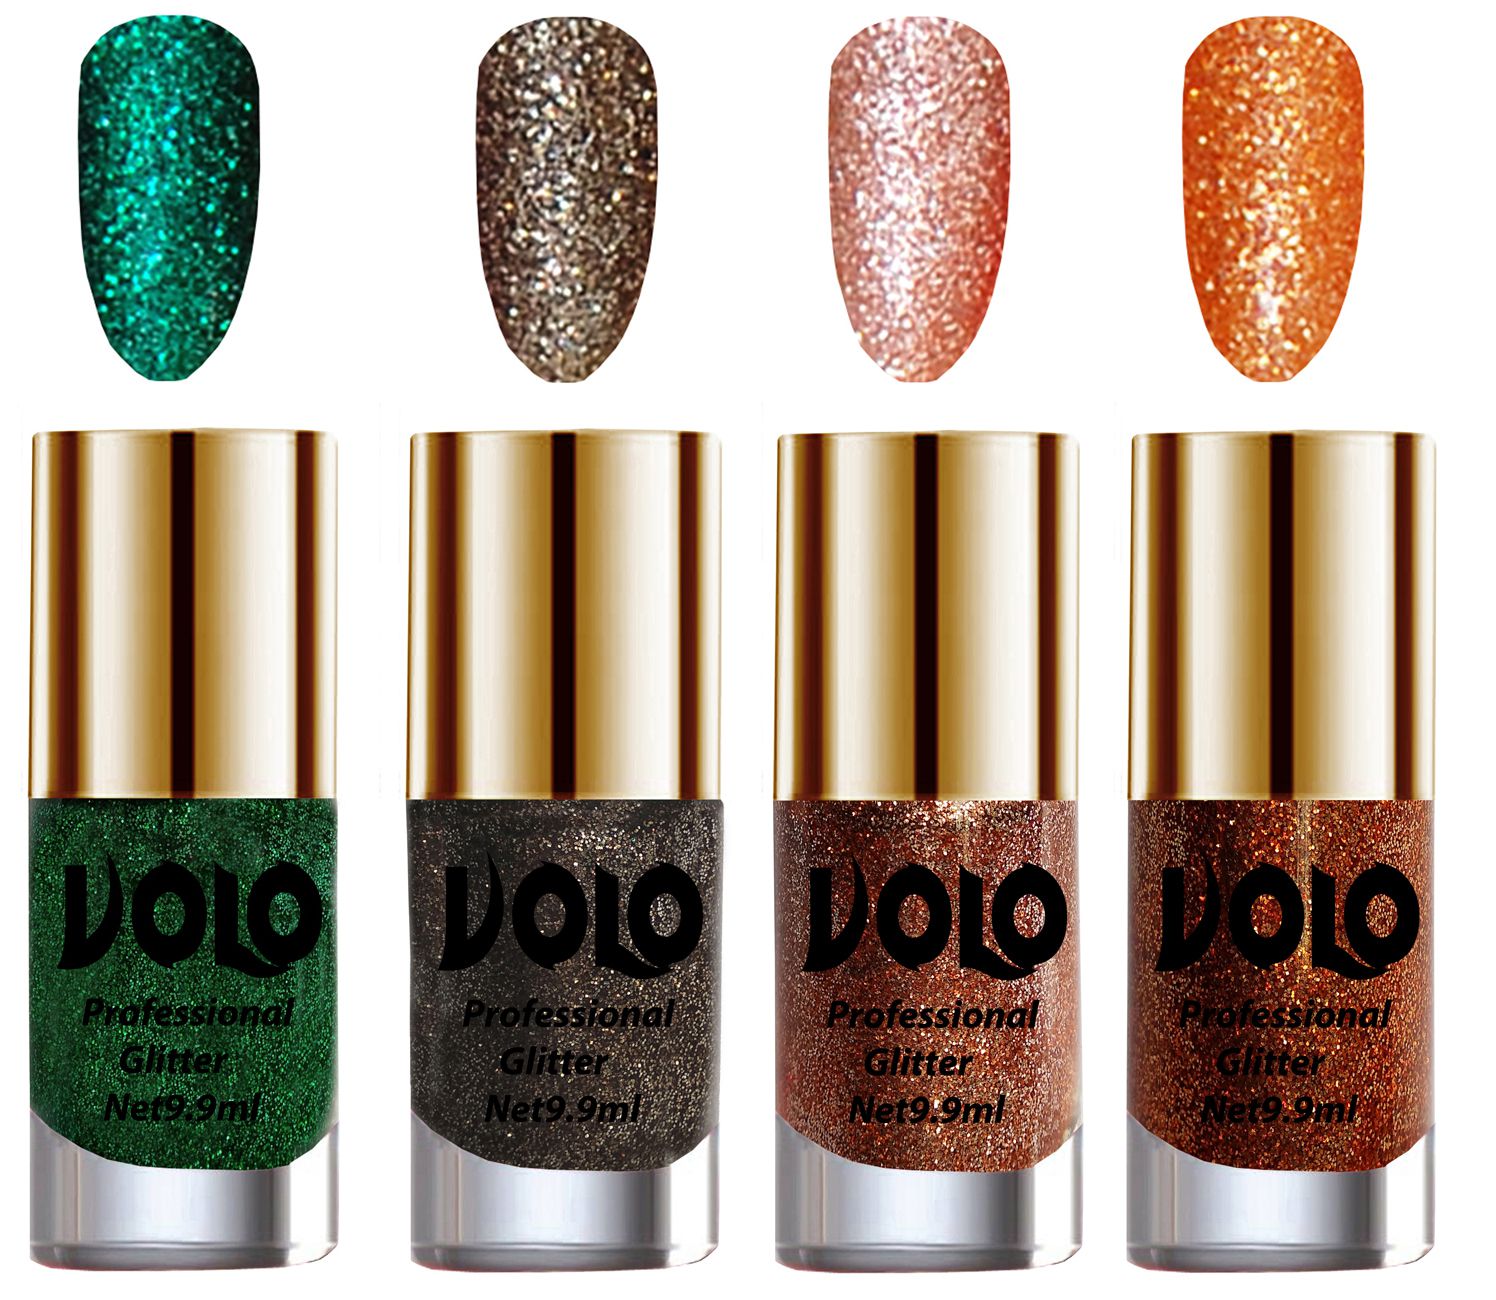     			VOLO Professionally Used Glitter Shine Nail Polish Green,Grey,Peach Orange Pack of 4 39 mL